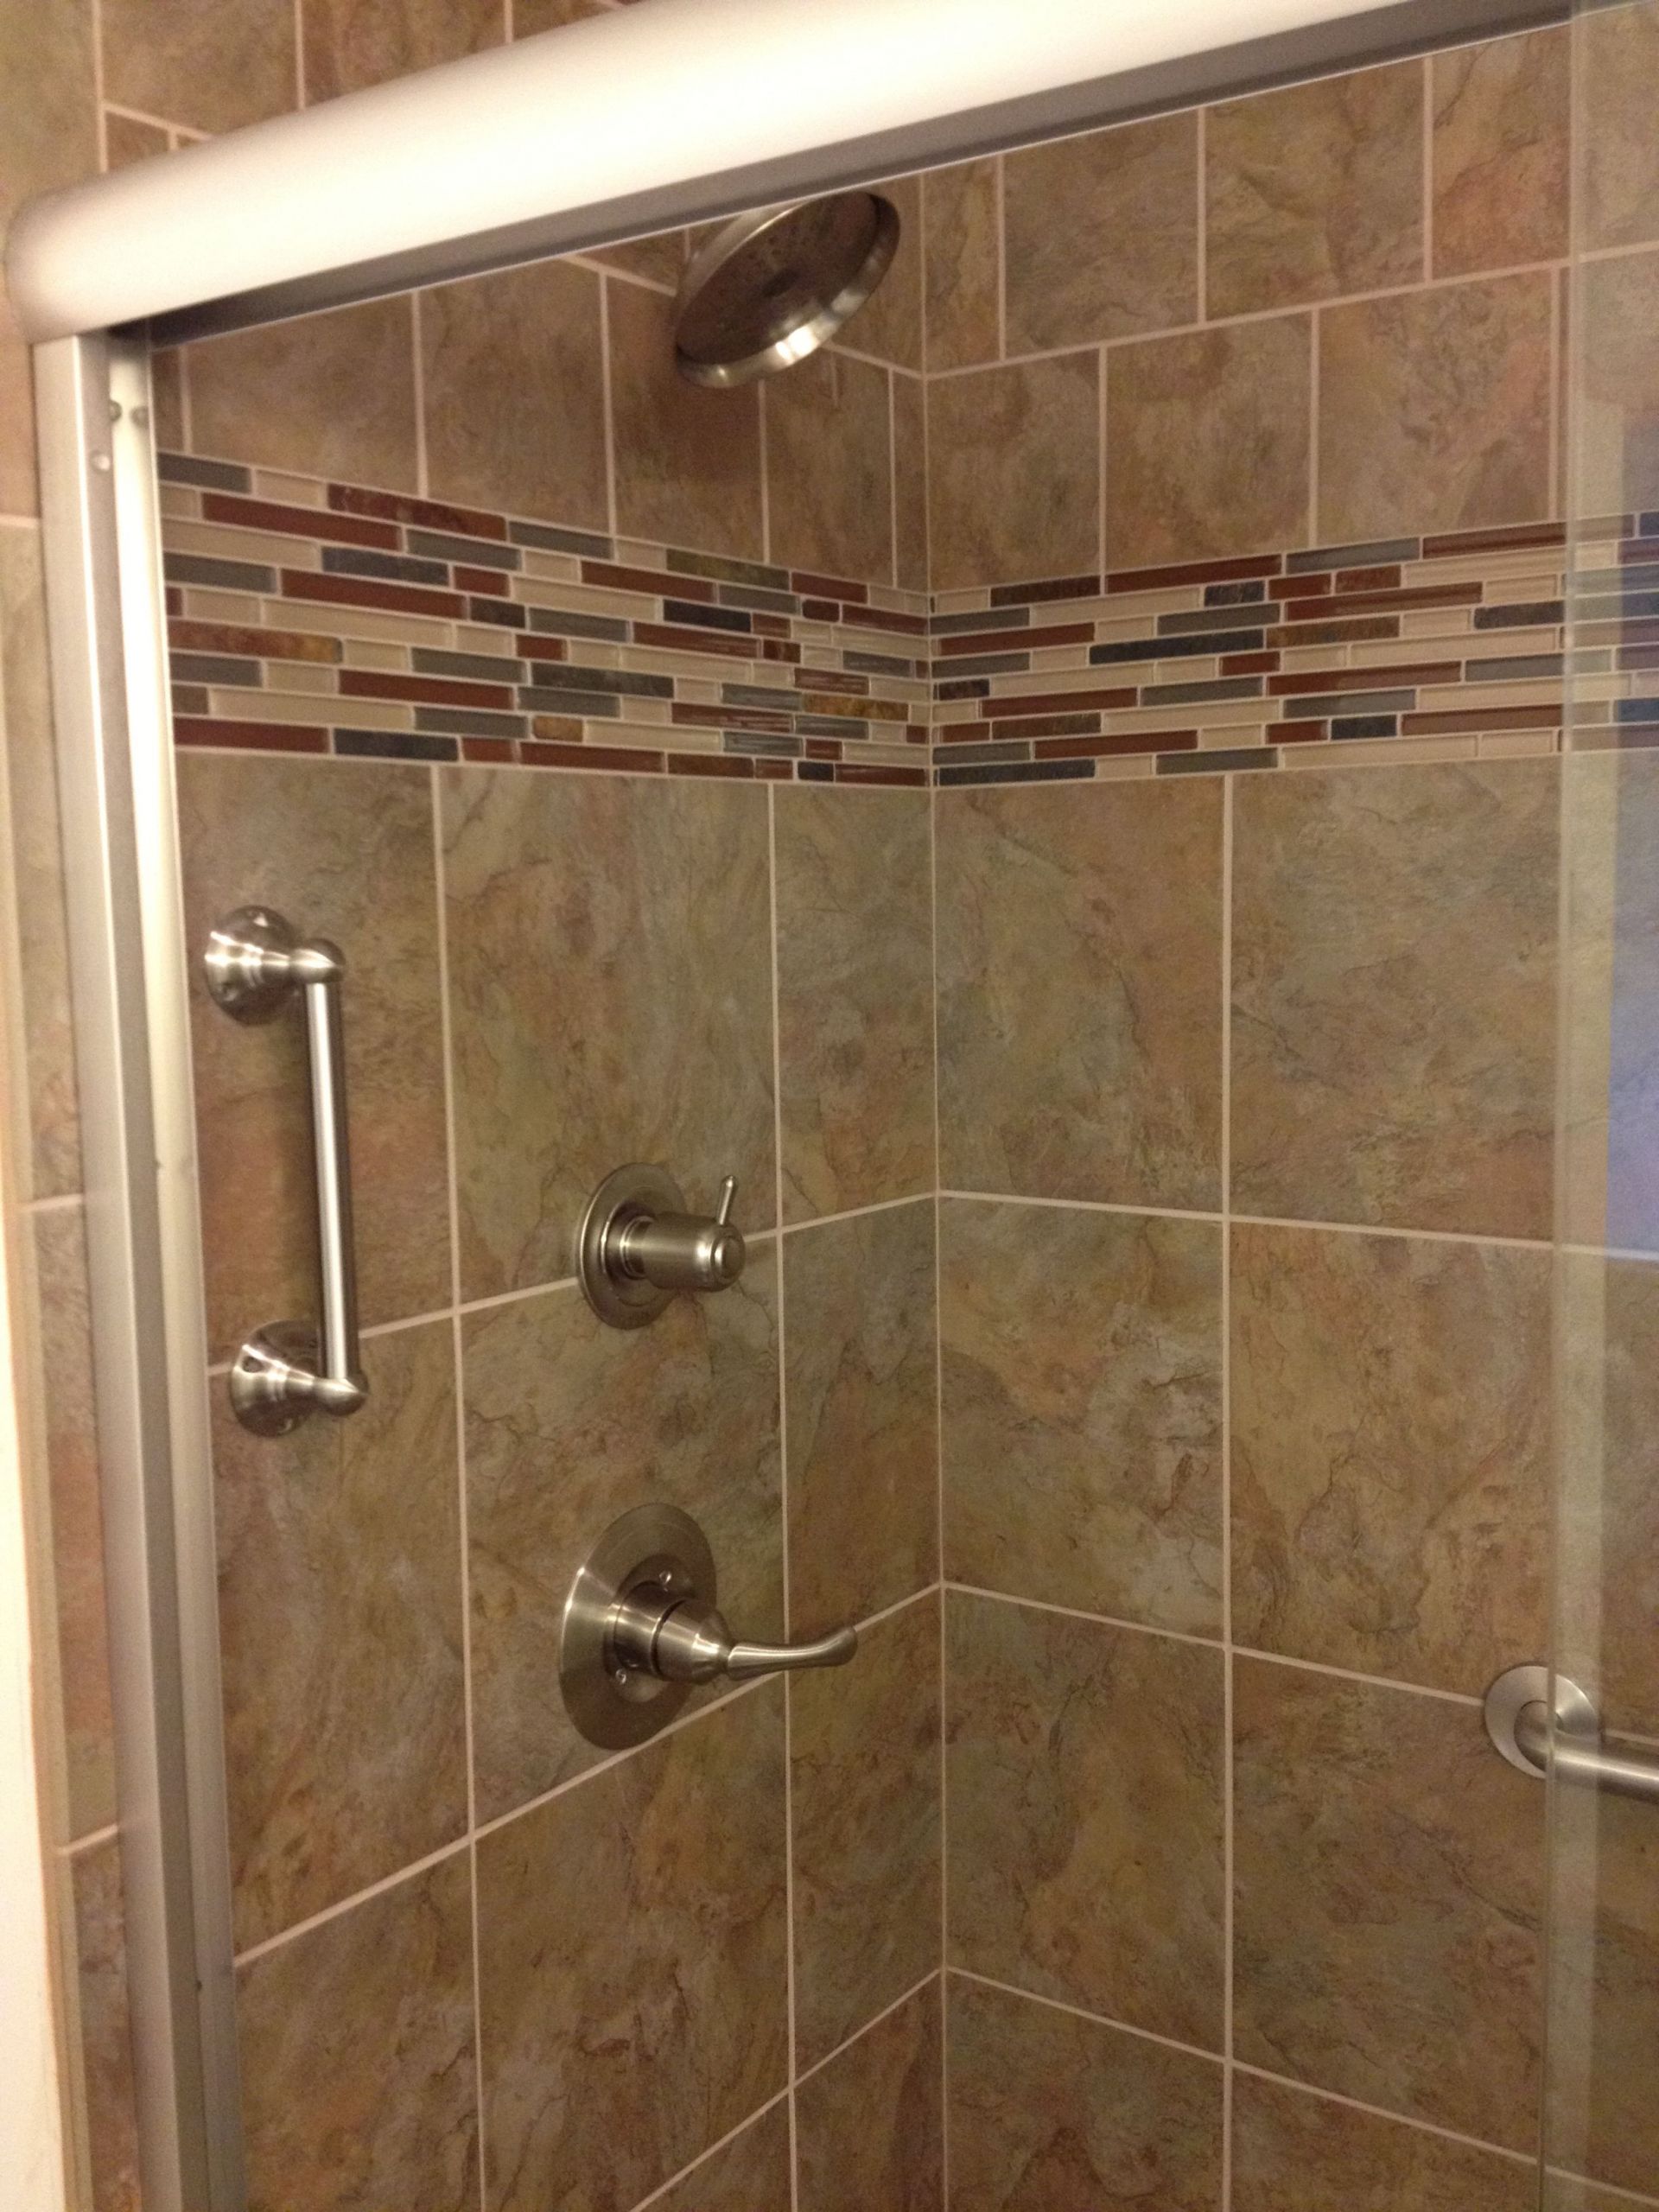 Tile Borders For Bathrooms
 Decorative tile border